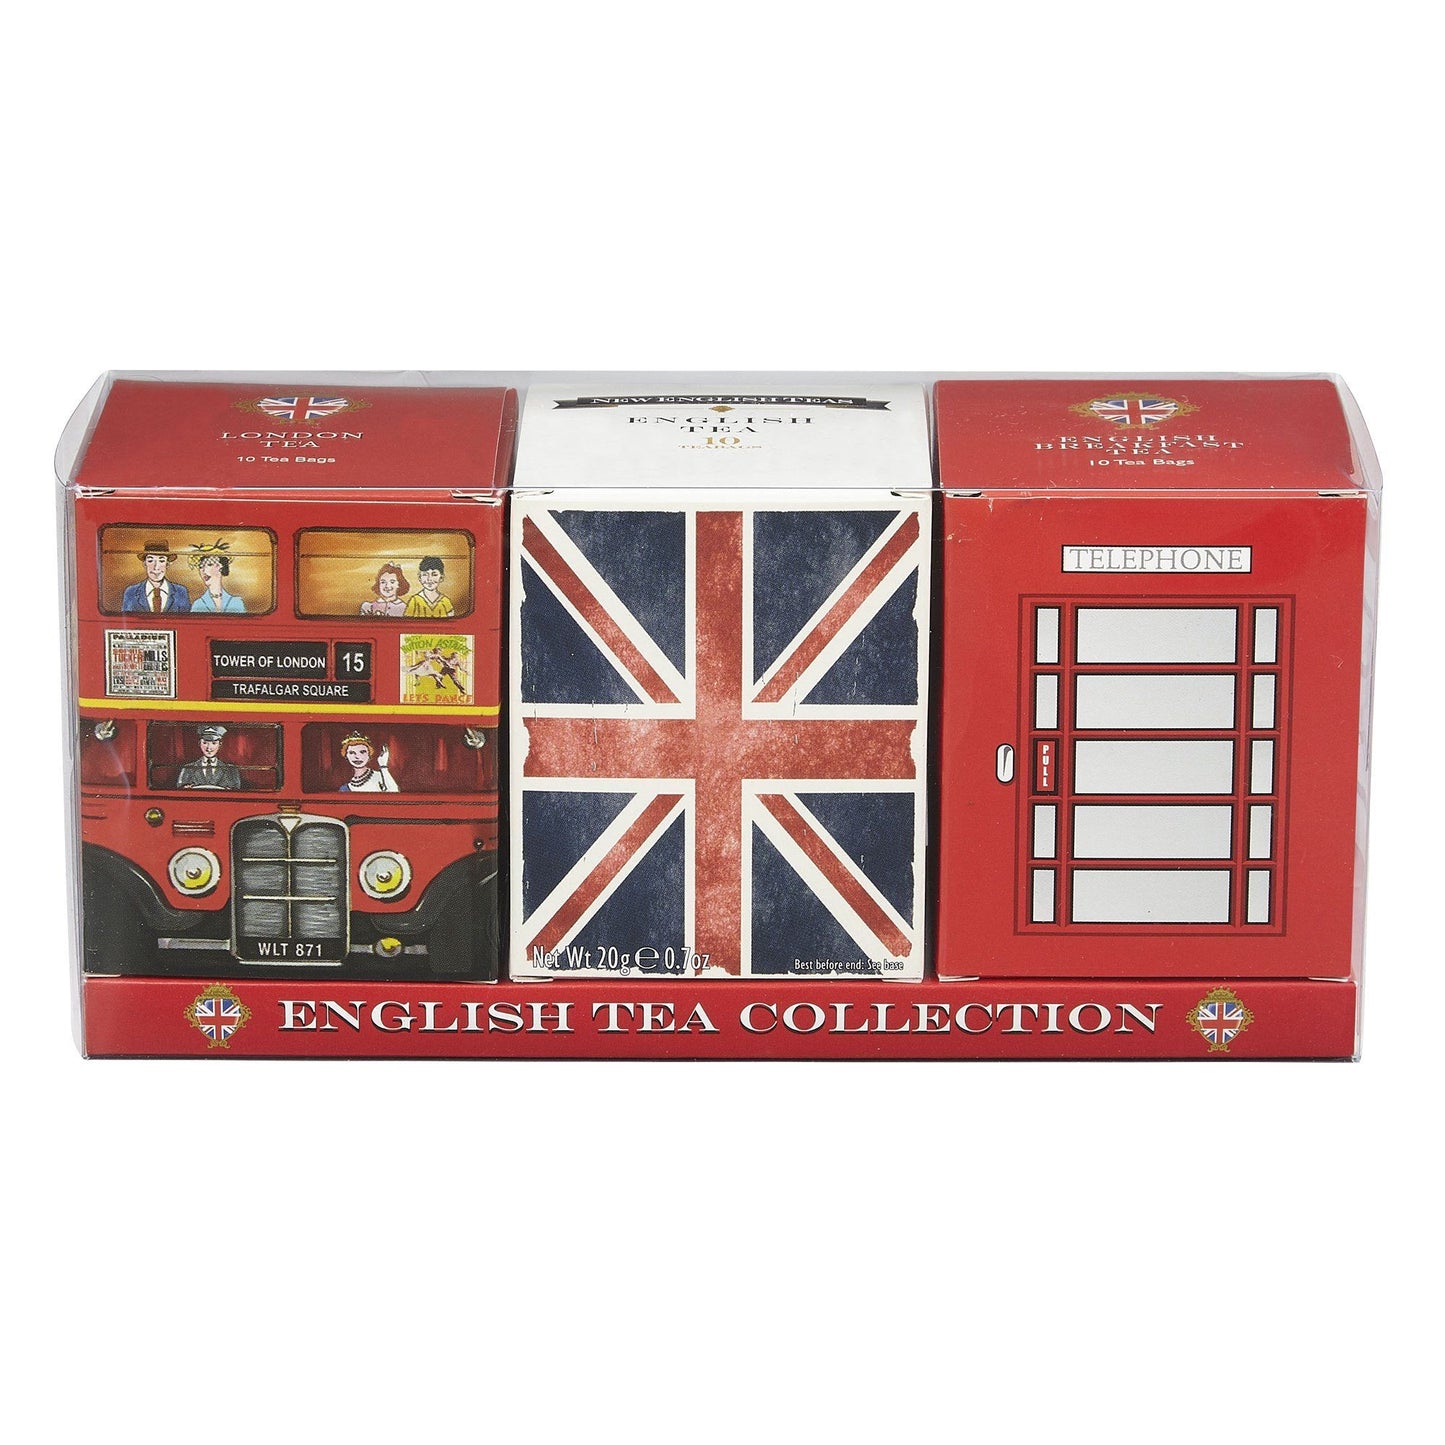 English Tea Collection Triple Carton Gift Pack Black Tea New English Teas 